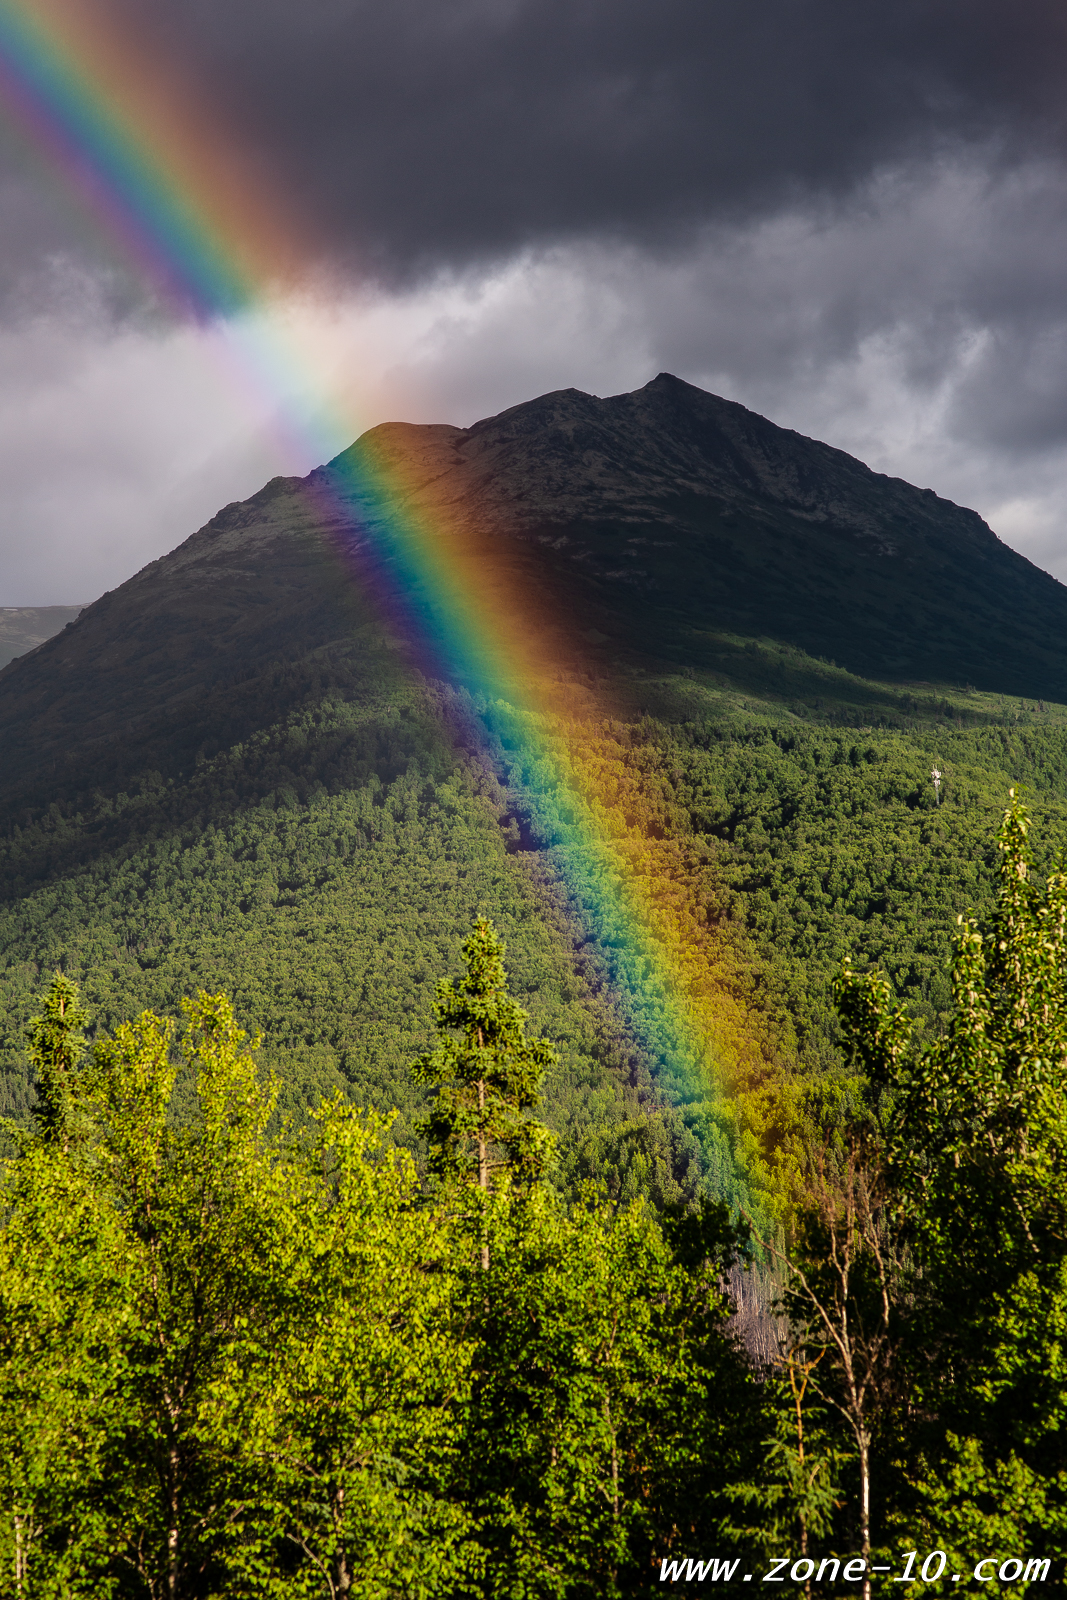 Rainbow and Mountain